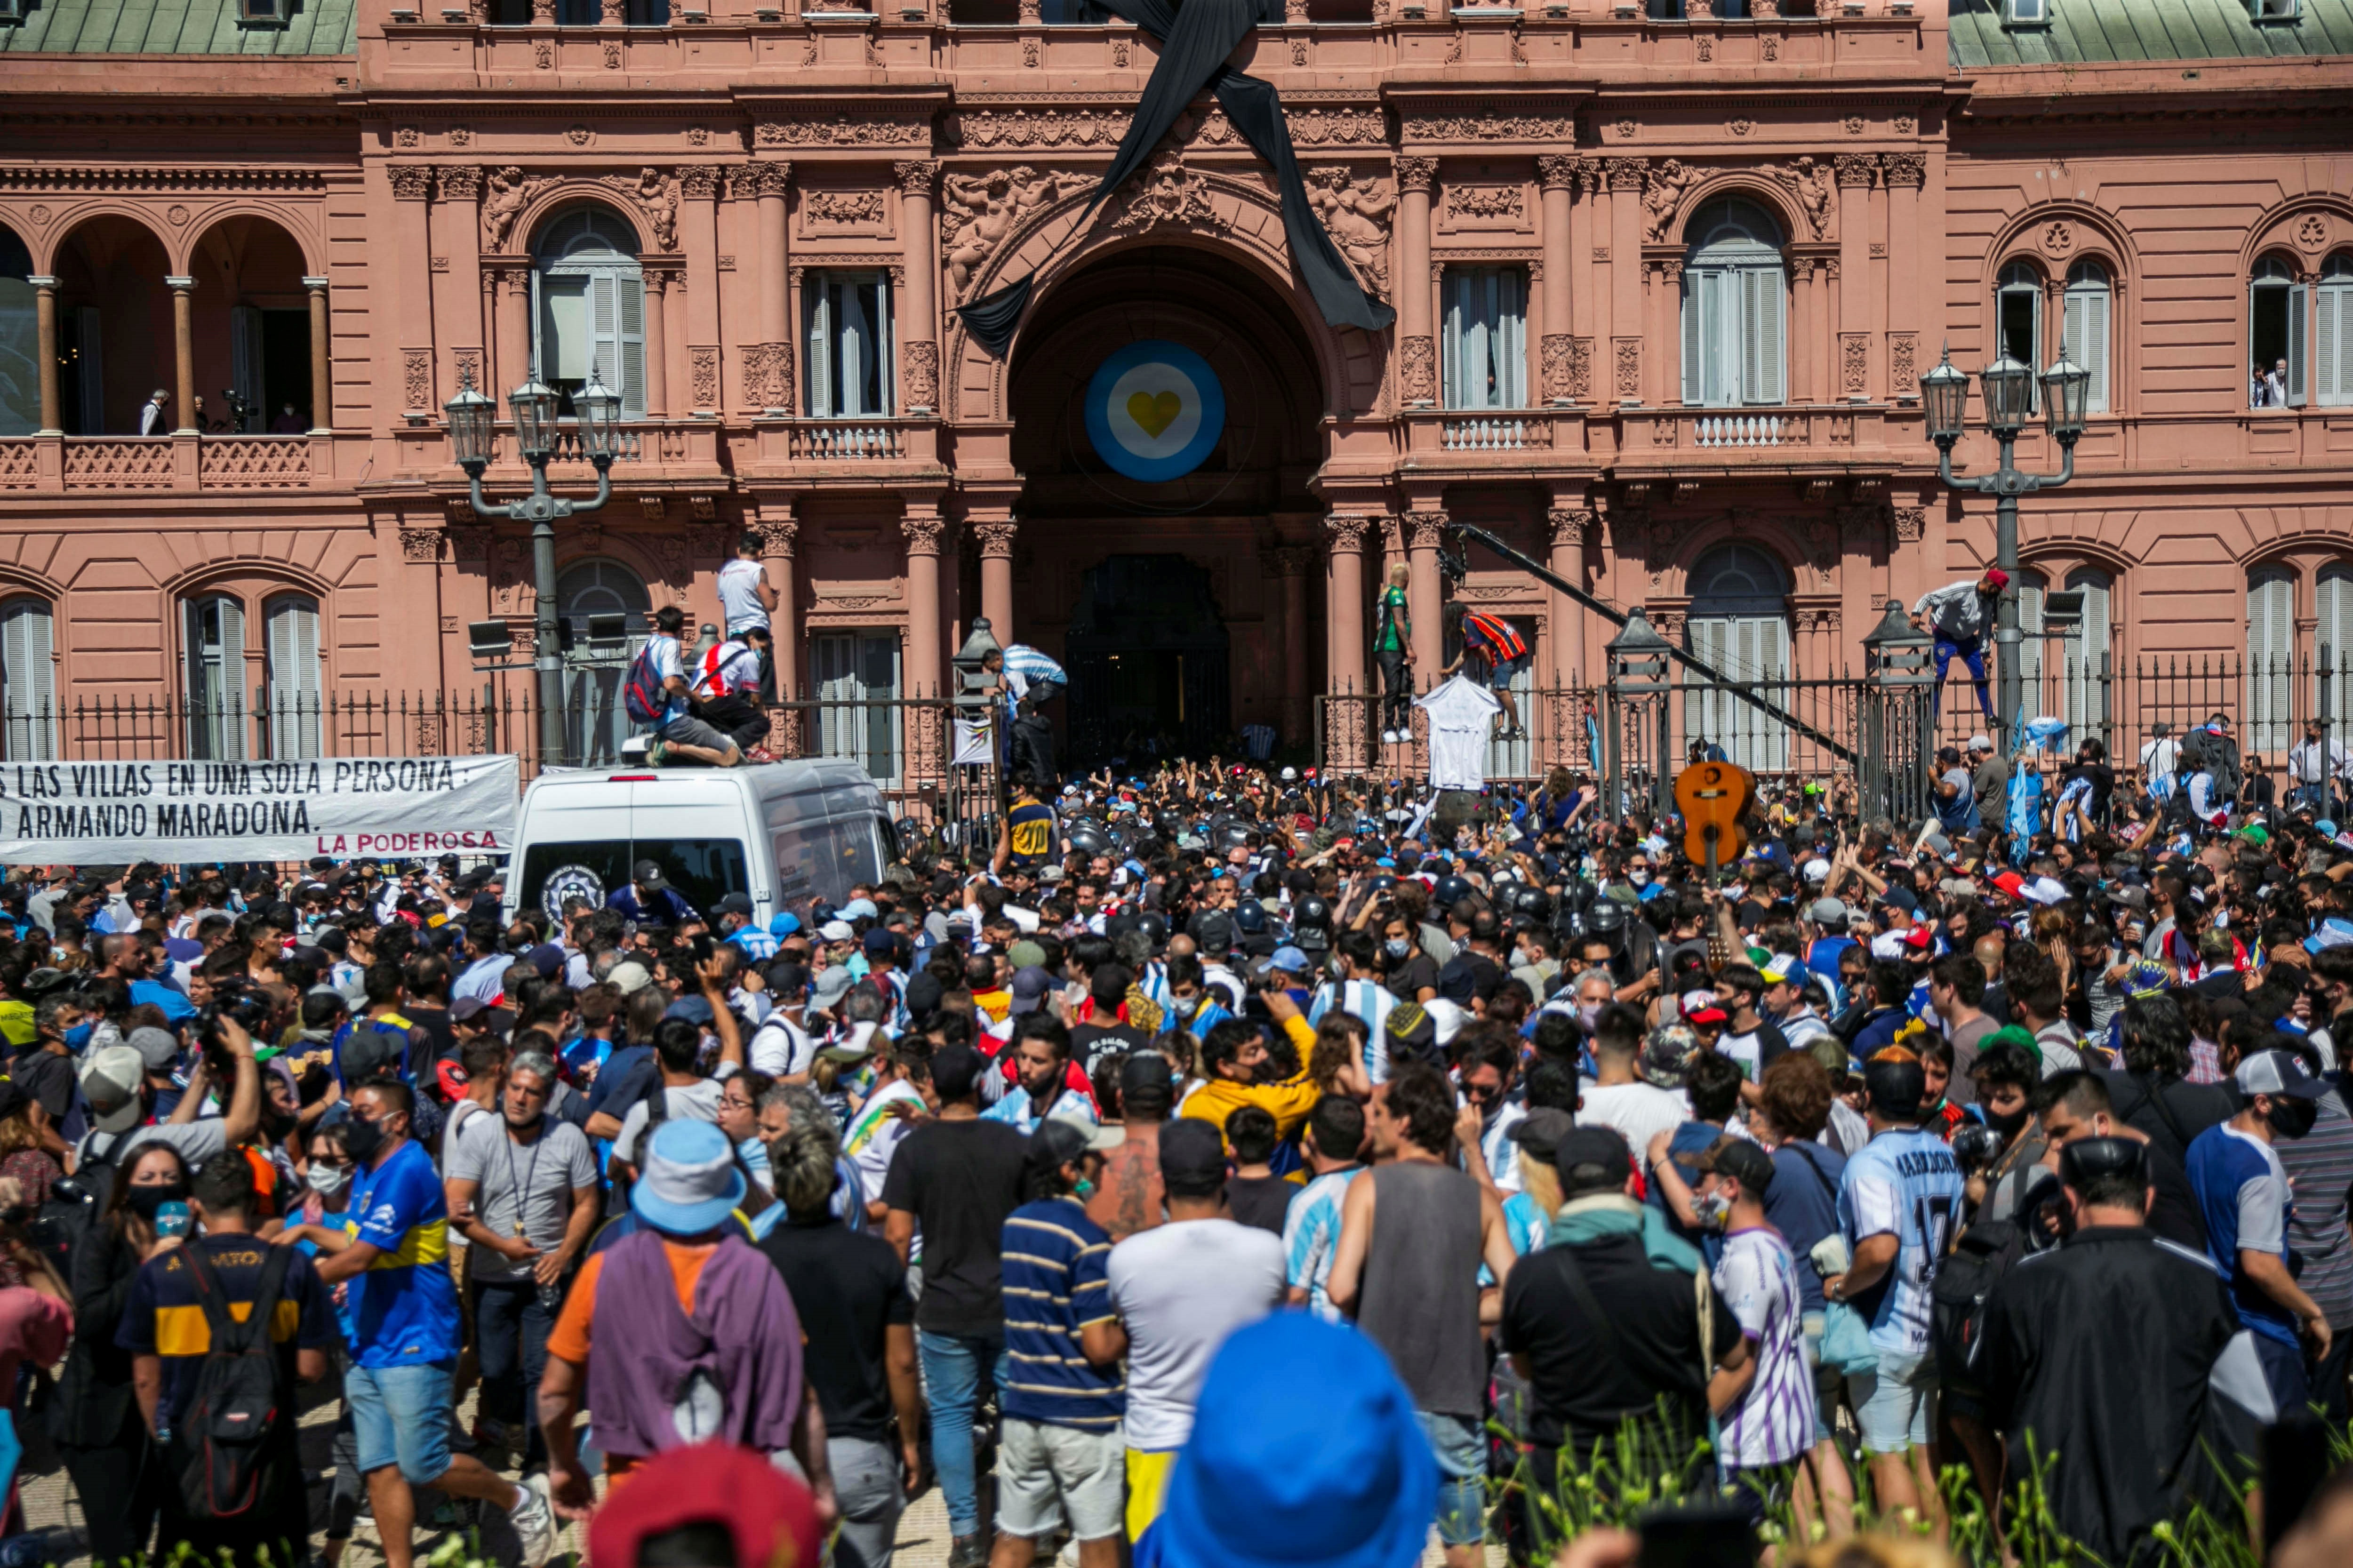 La caótica despedida a Maradona sigue suscitando polémica en Argentina